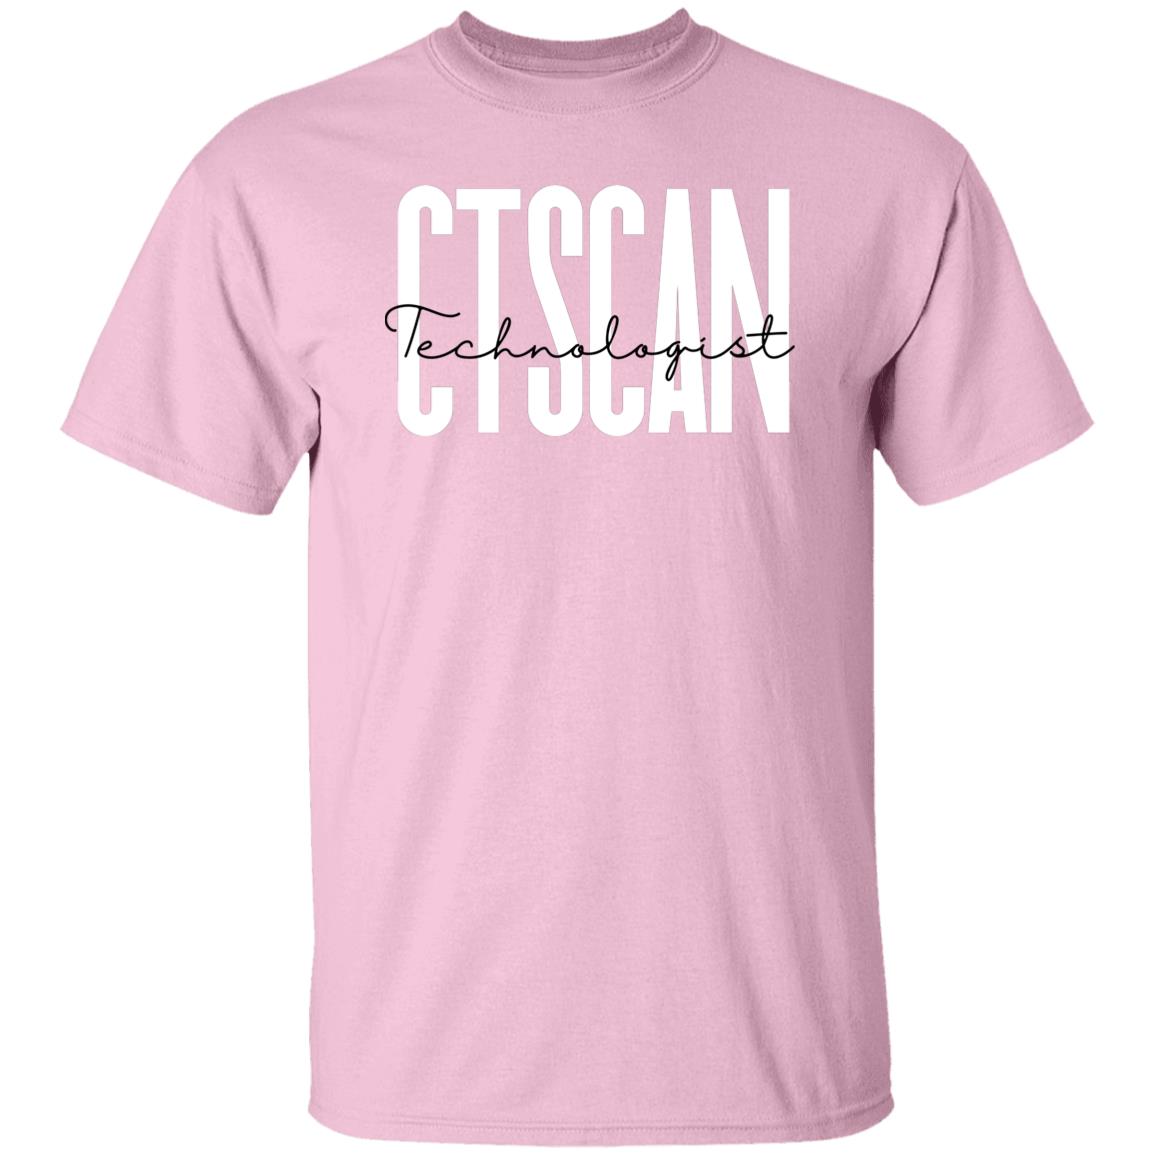 Ctscan Technologist Unisex T-shirt CT scan tech Sand Blue Pink-Family-Gift-Planet